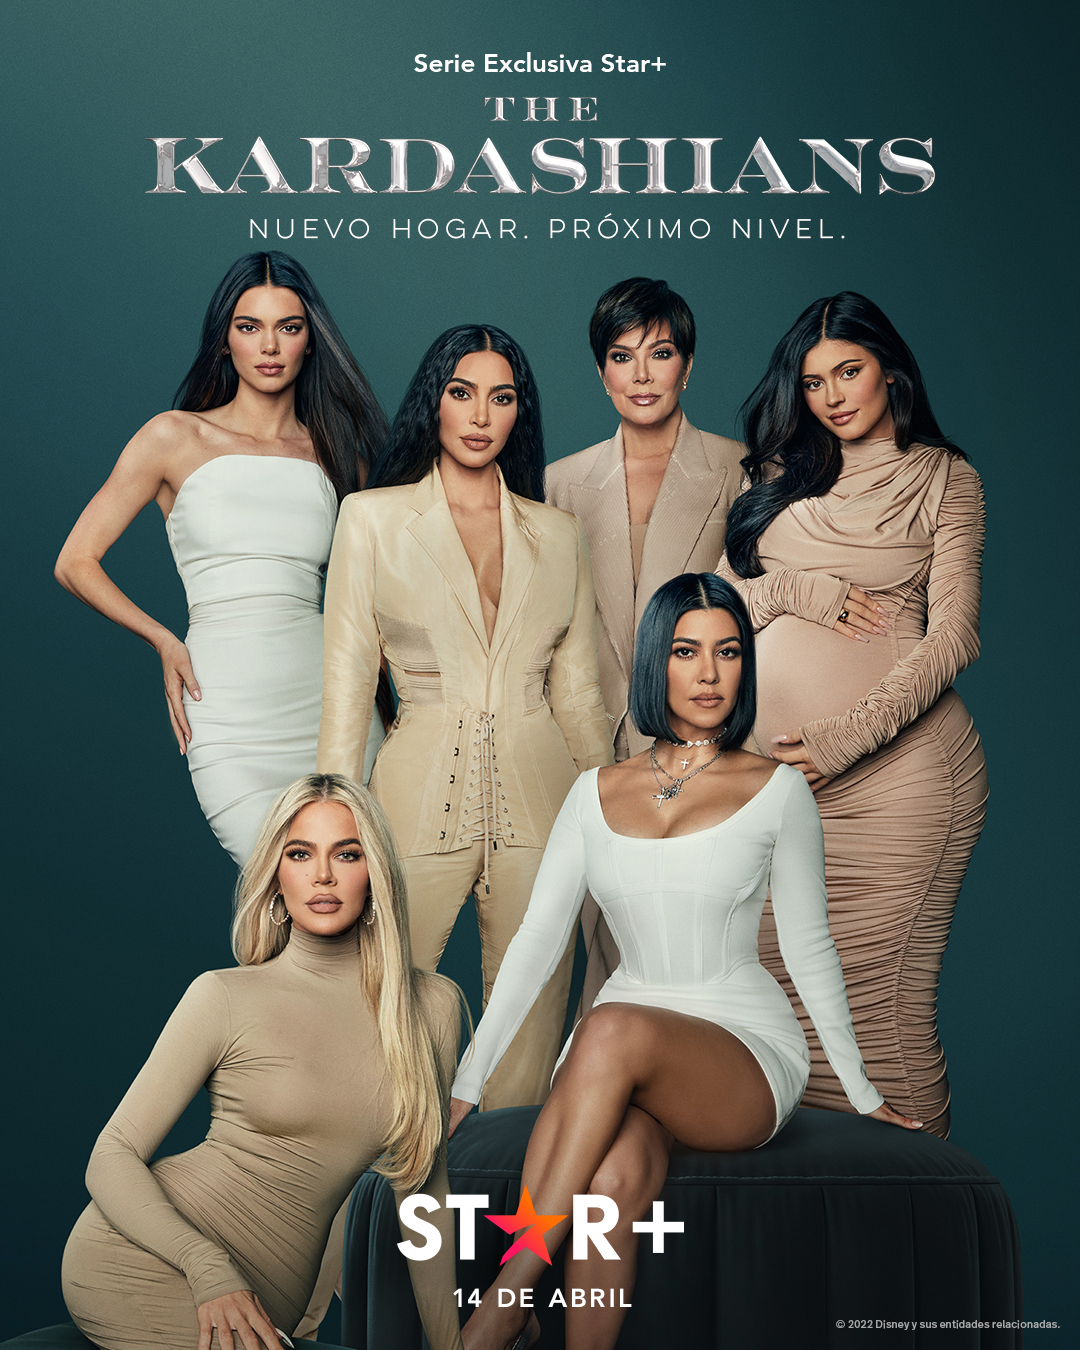 The Kardashians Star